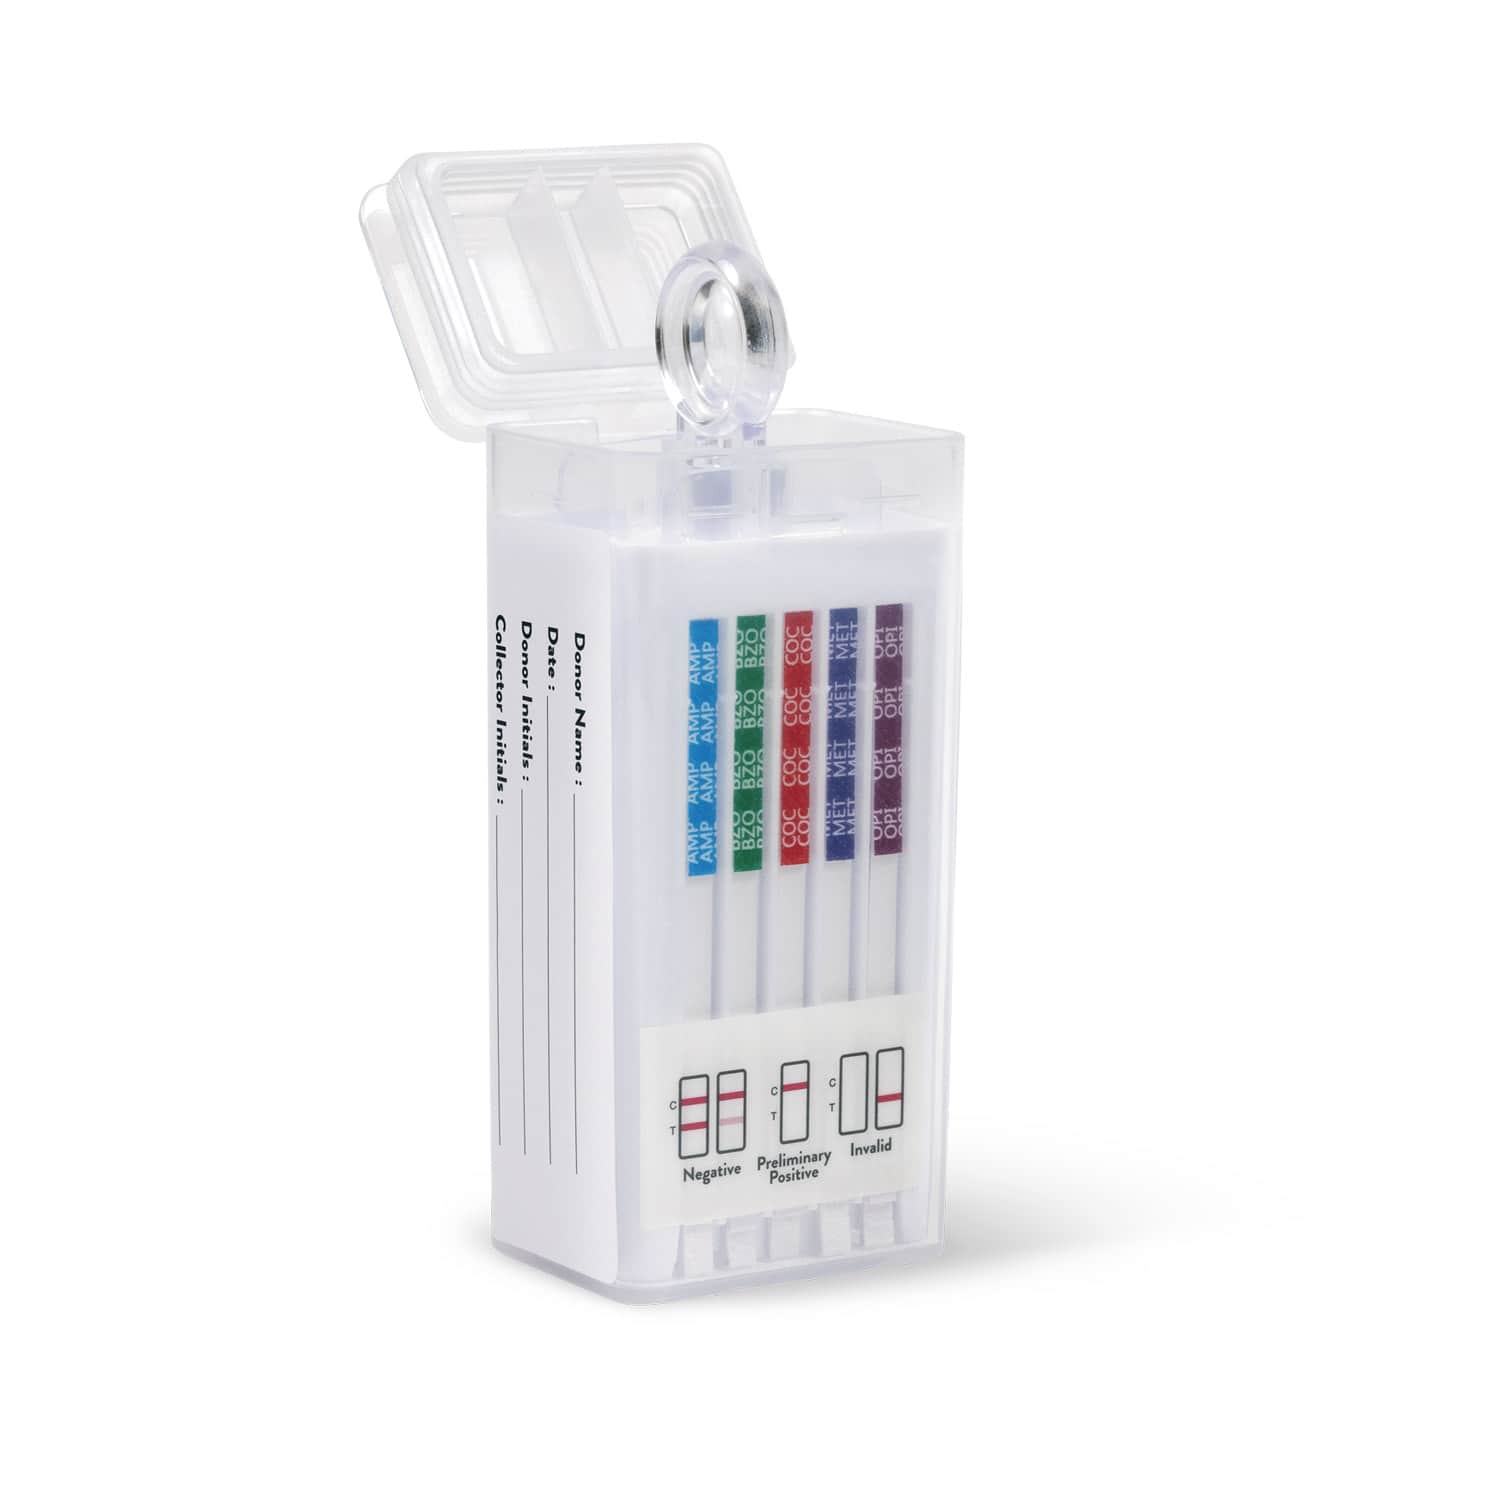 Surestep™ Oral Fluid Test Drug Screen Cube (6) For The Qualitative Detection Of 6 Different Drugs In Saliva Samples.